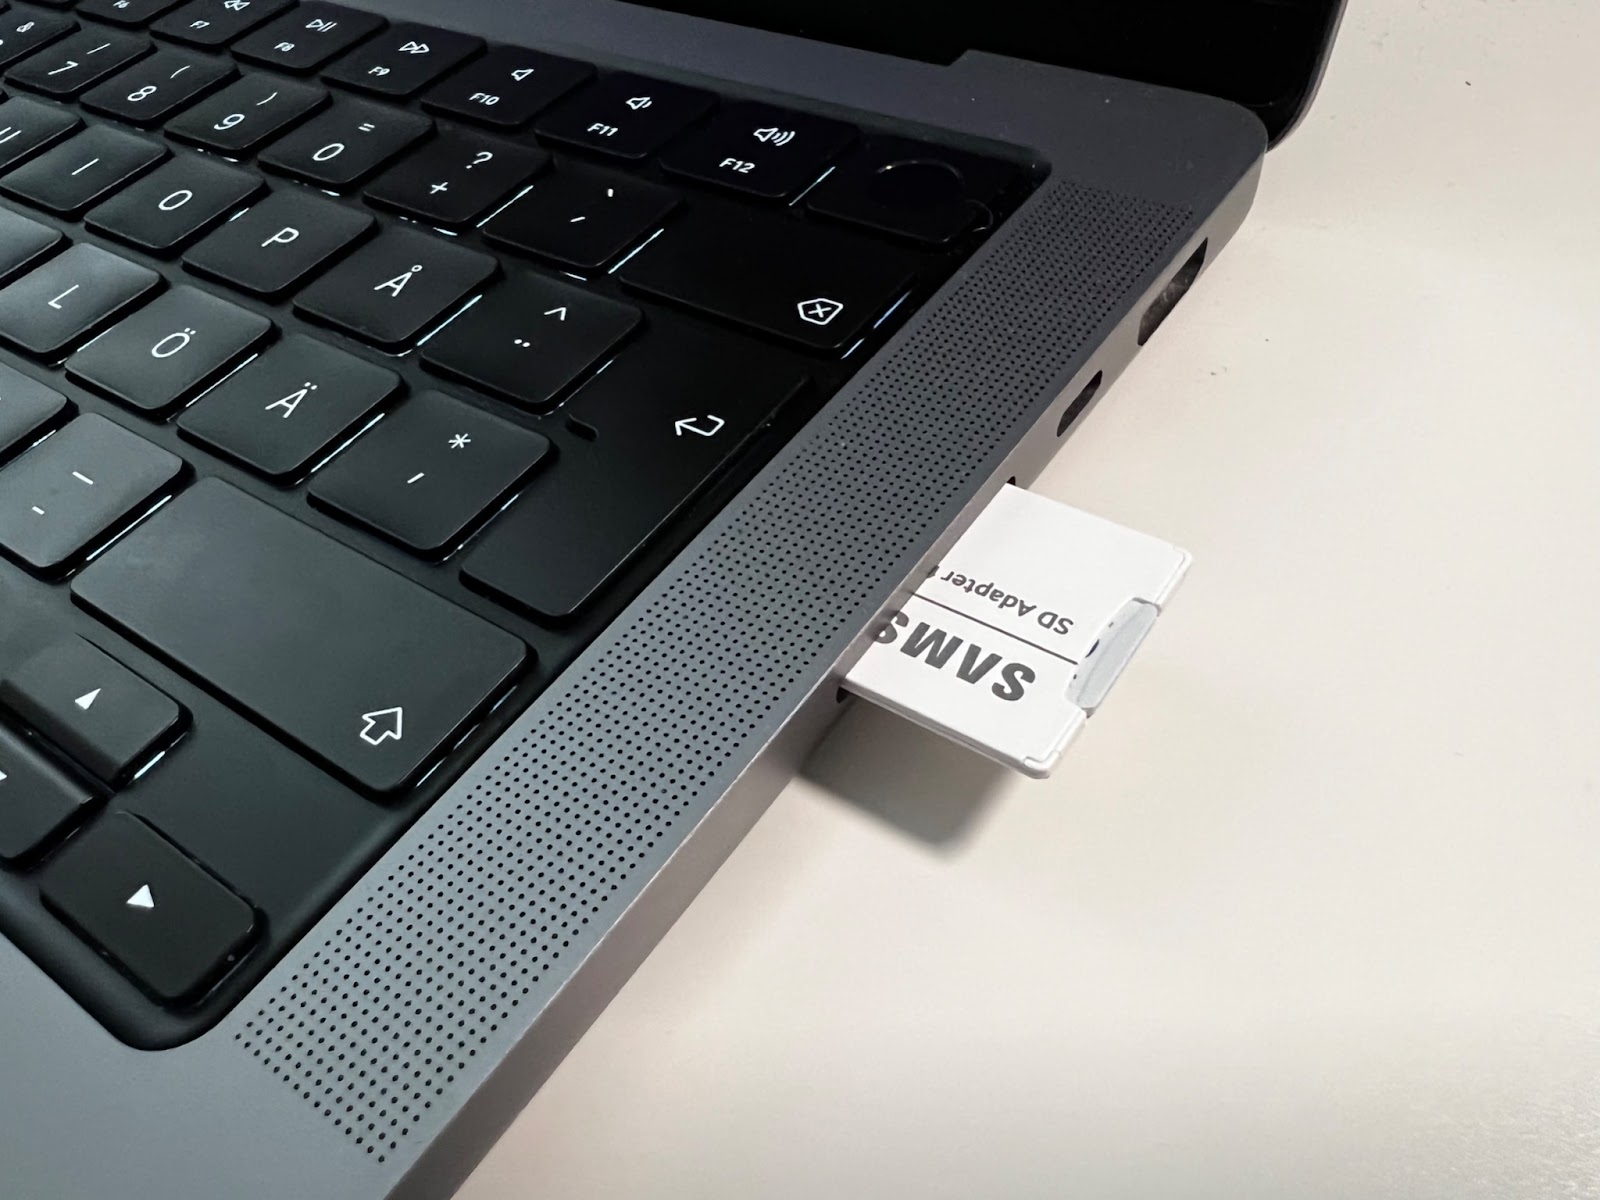 microSD plugged into laptop